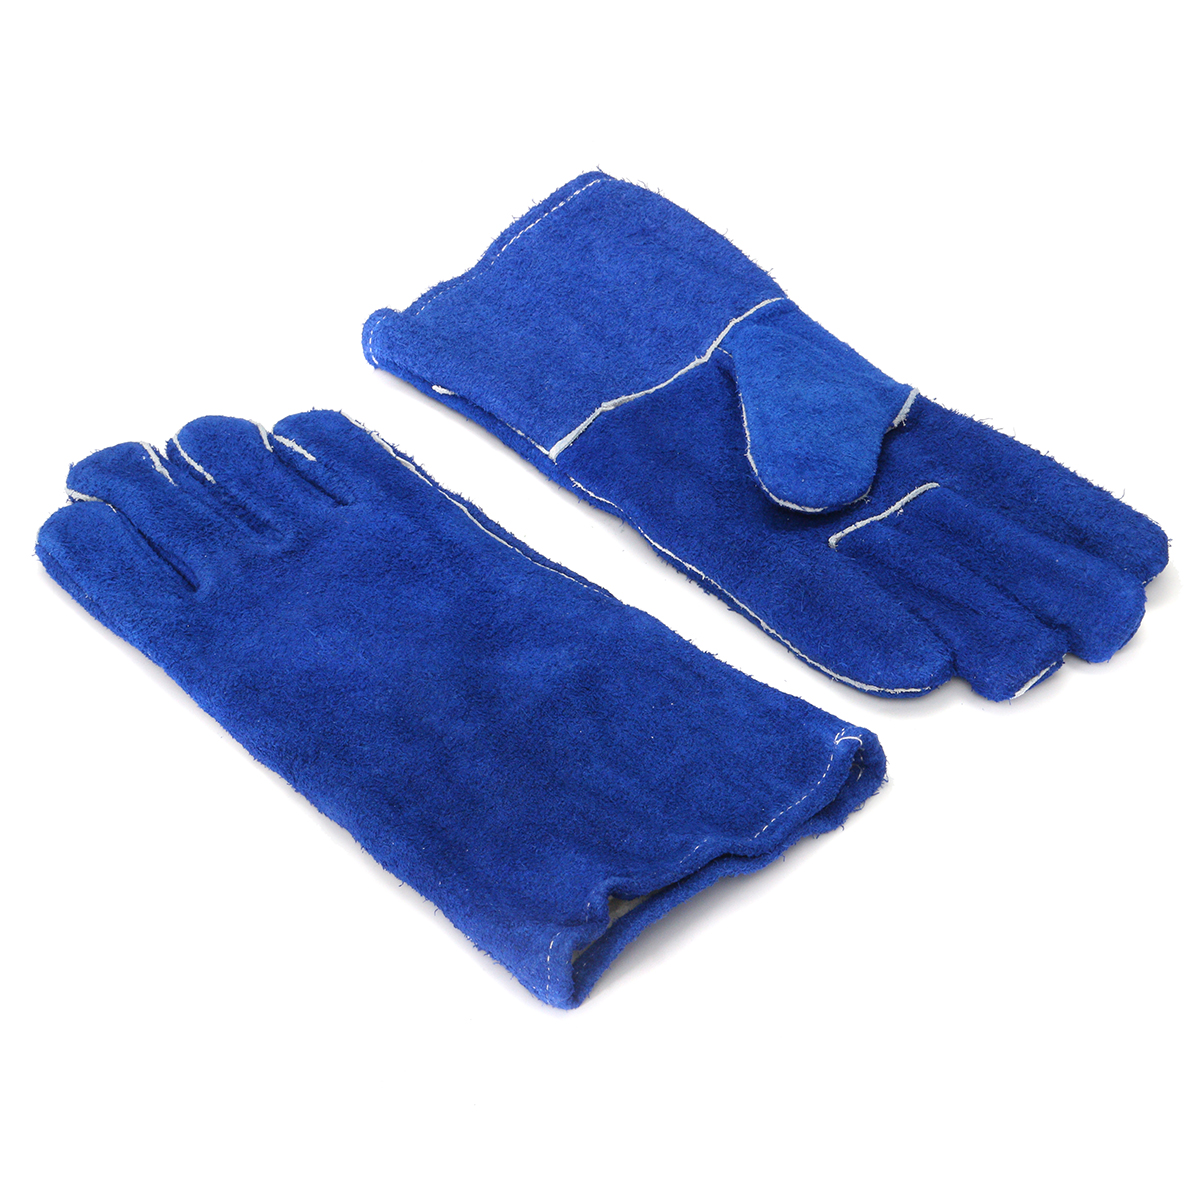 1-Pair-Wood-Burner-Welder-Gauntlets-Fire-High-Temp-Stoves-Protection-Long-Gloves-Blue-1161581